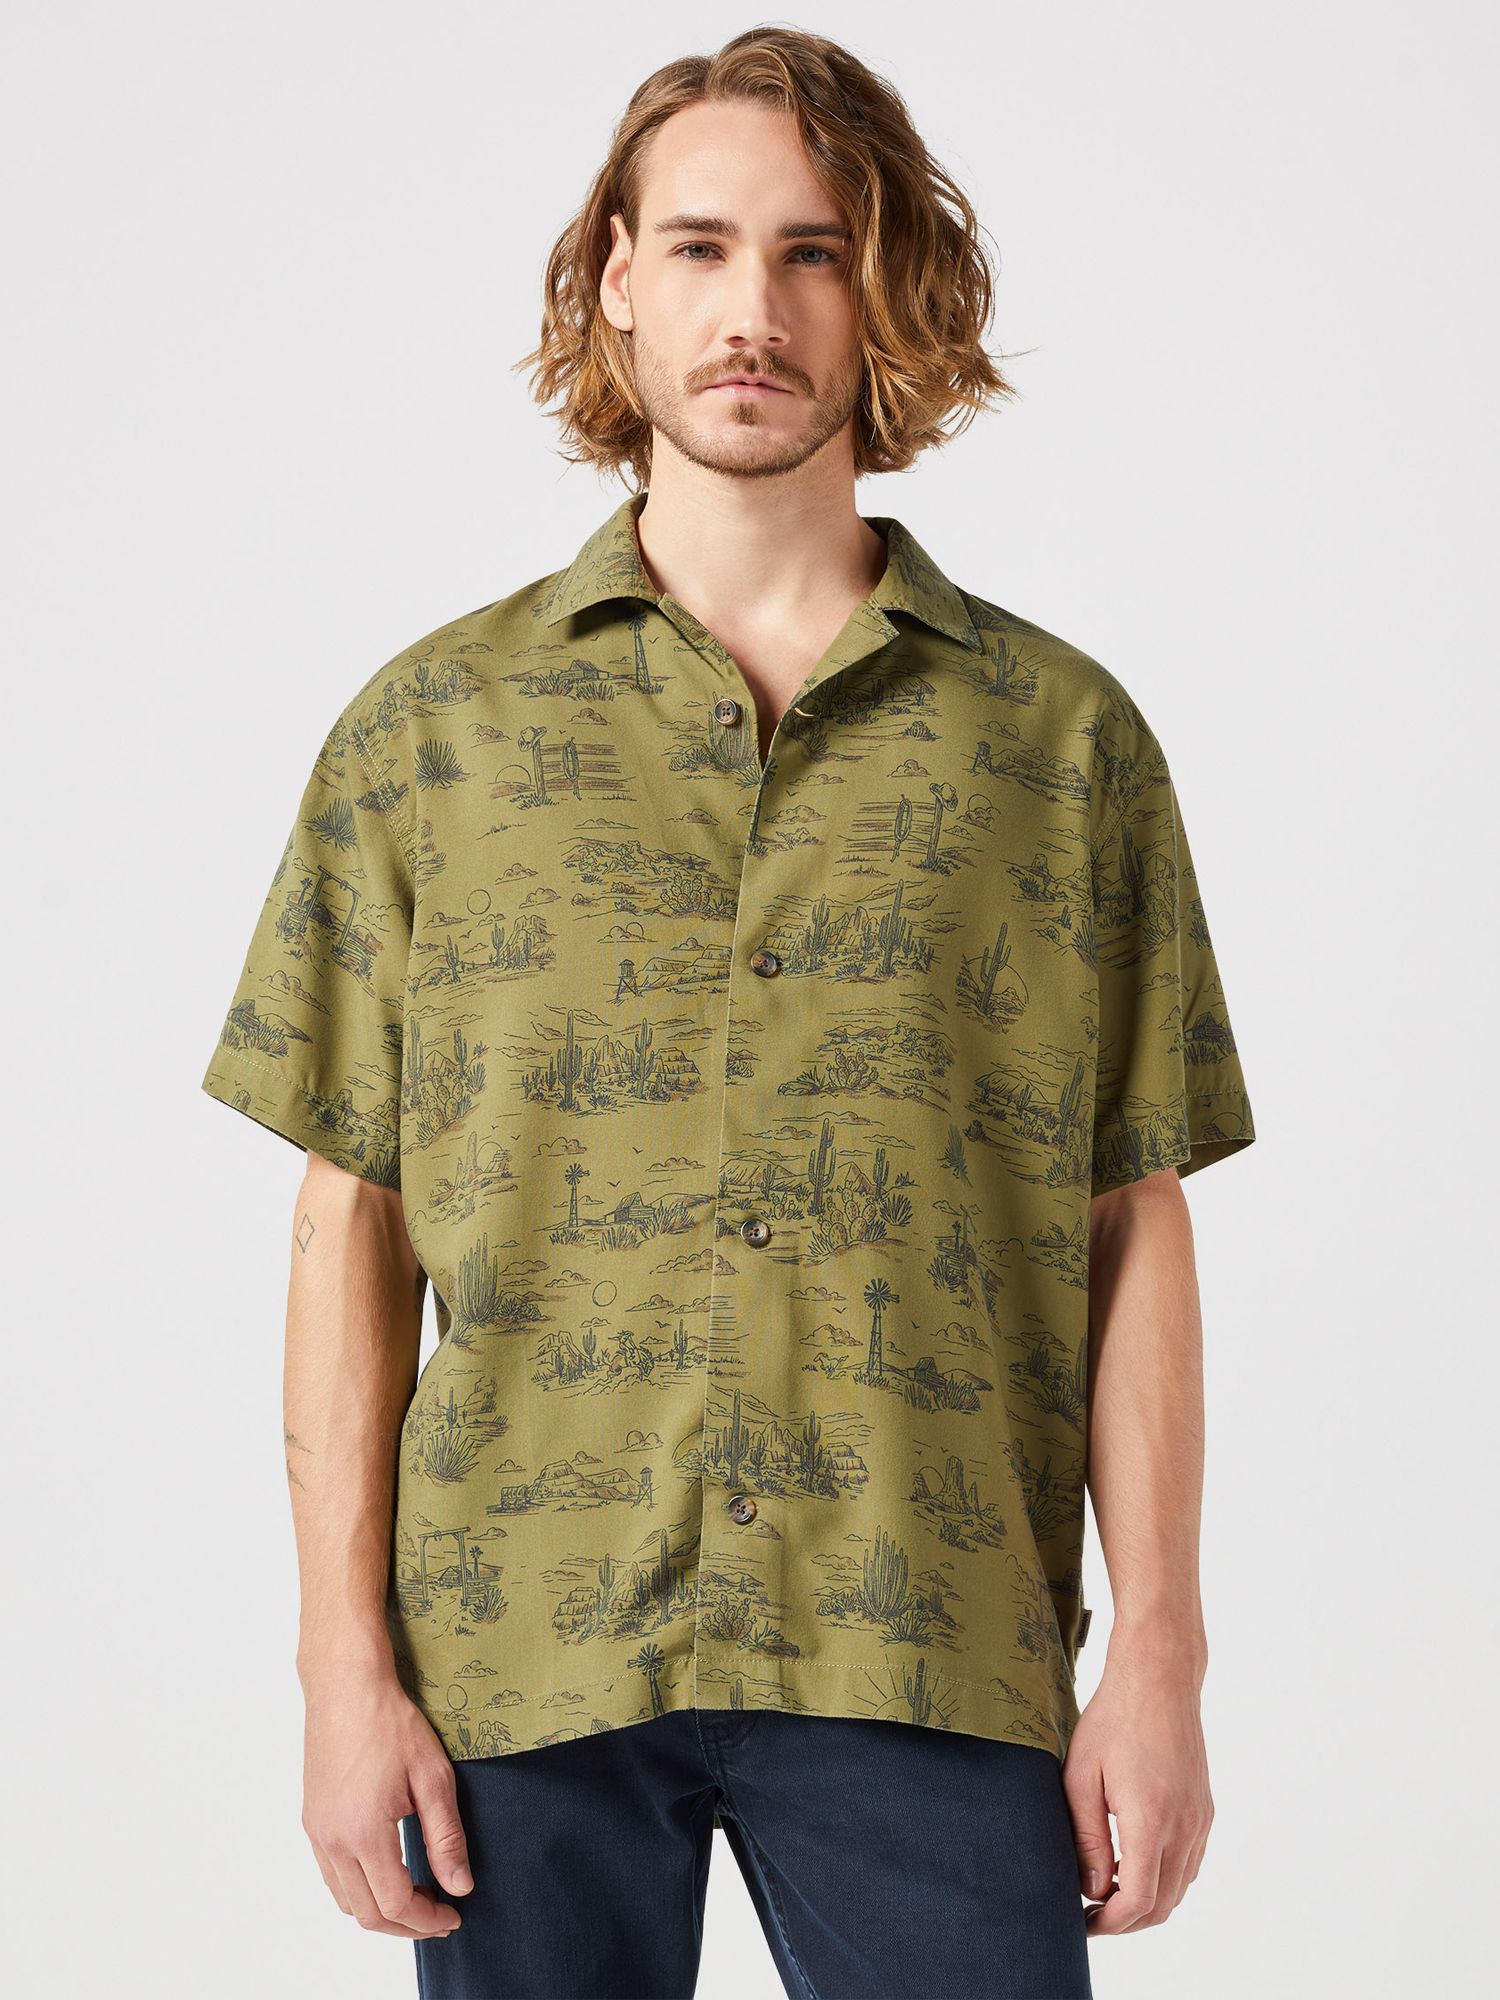 Wrangler Resort Short Sleeve Shirt, Olive, XL